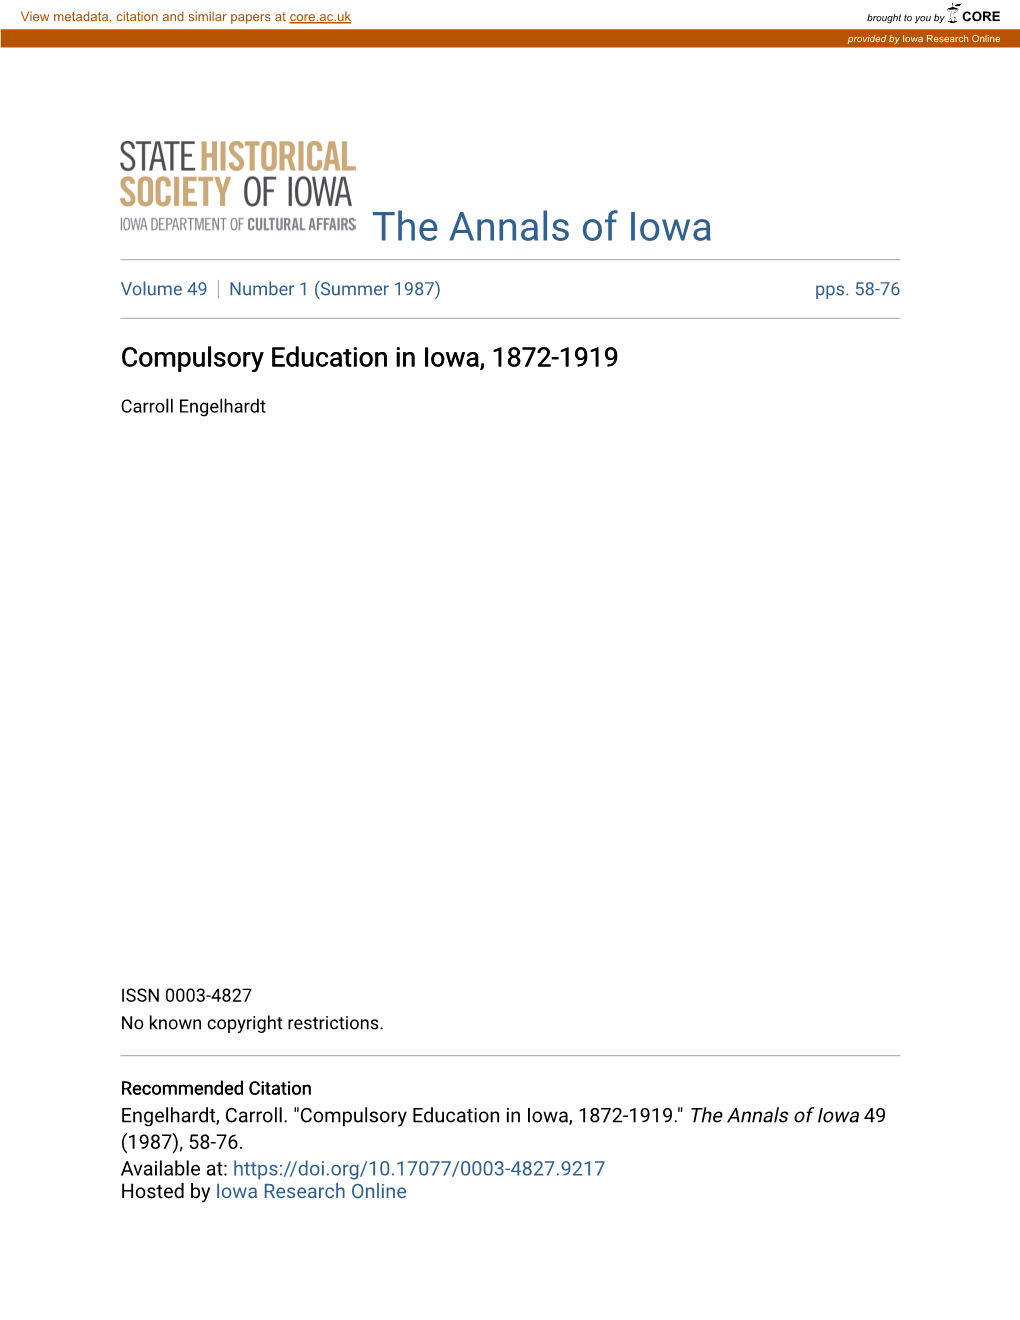 Compulsory Education in Iowa, 1872-1919